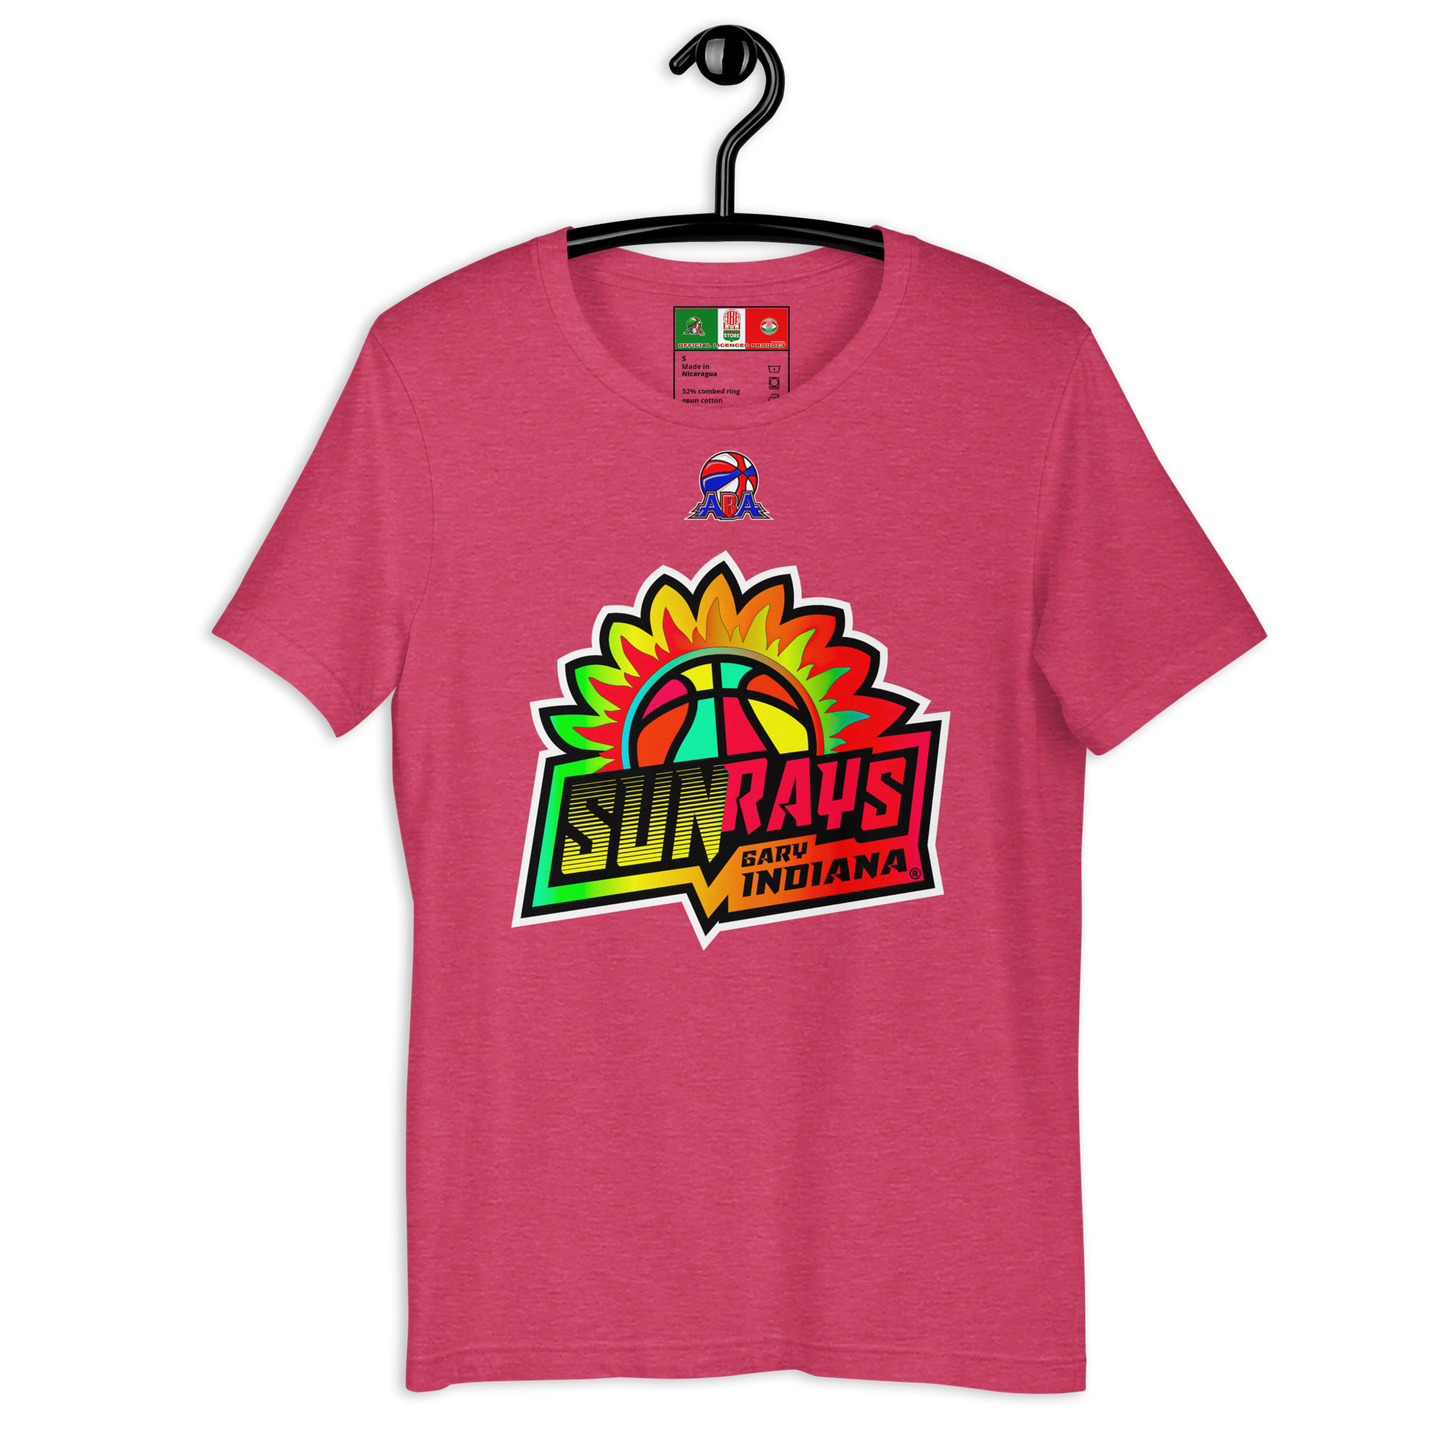 SUN RAYS • GARY INDIANA ABA BASKETBALL OFFICIAL Unisex t-shirt